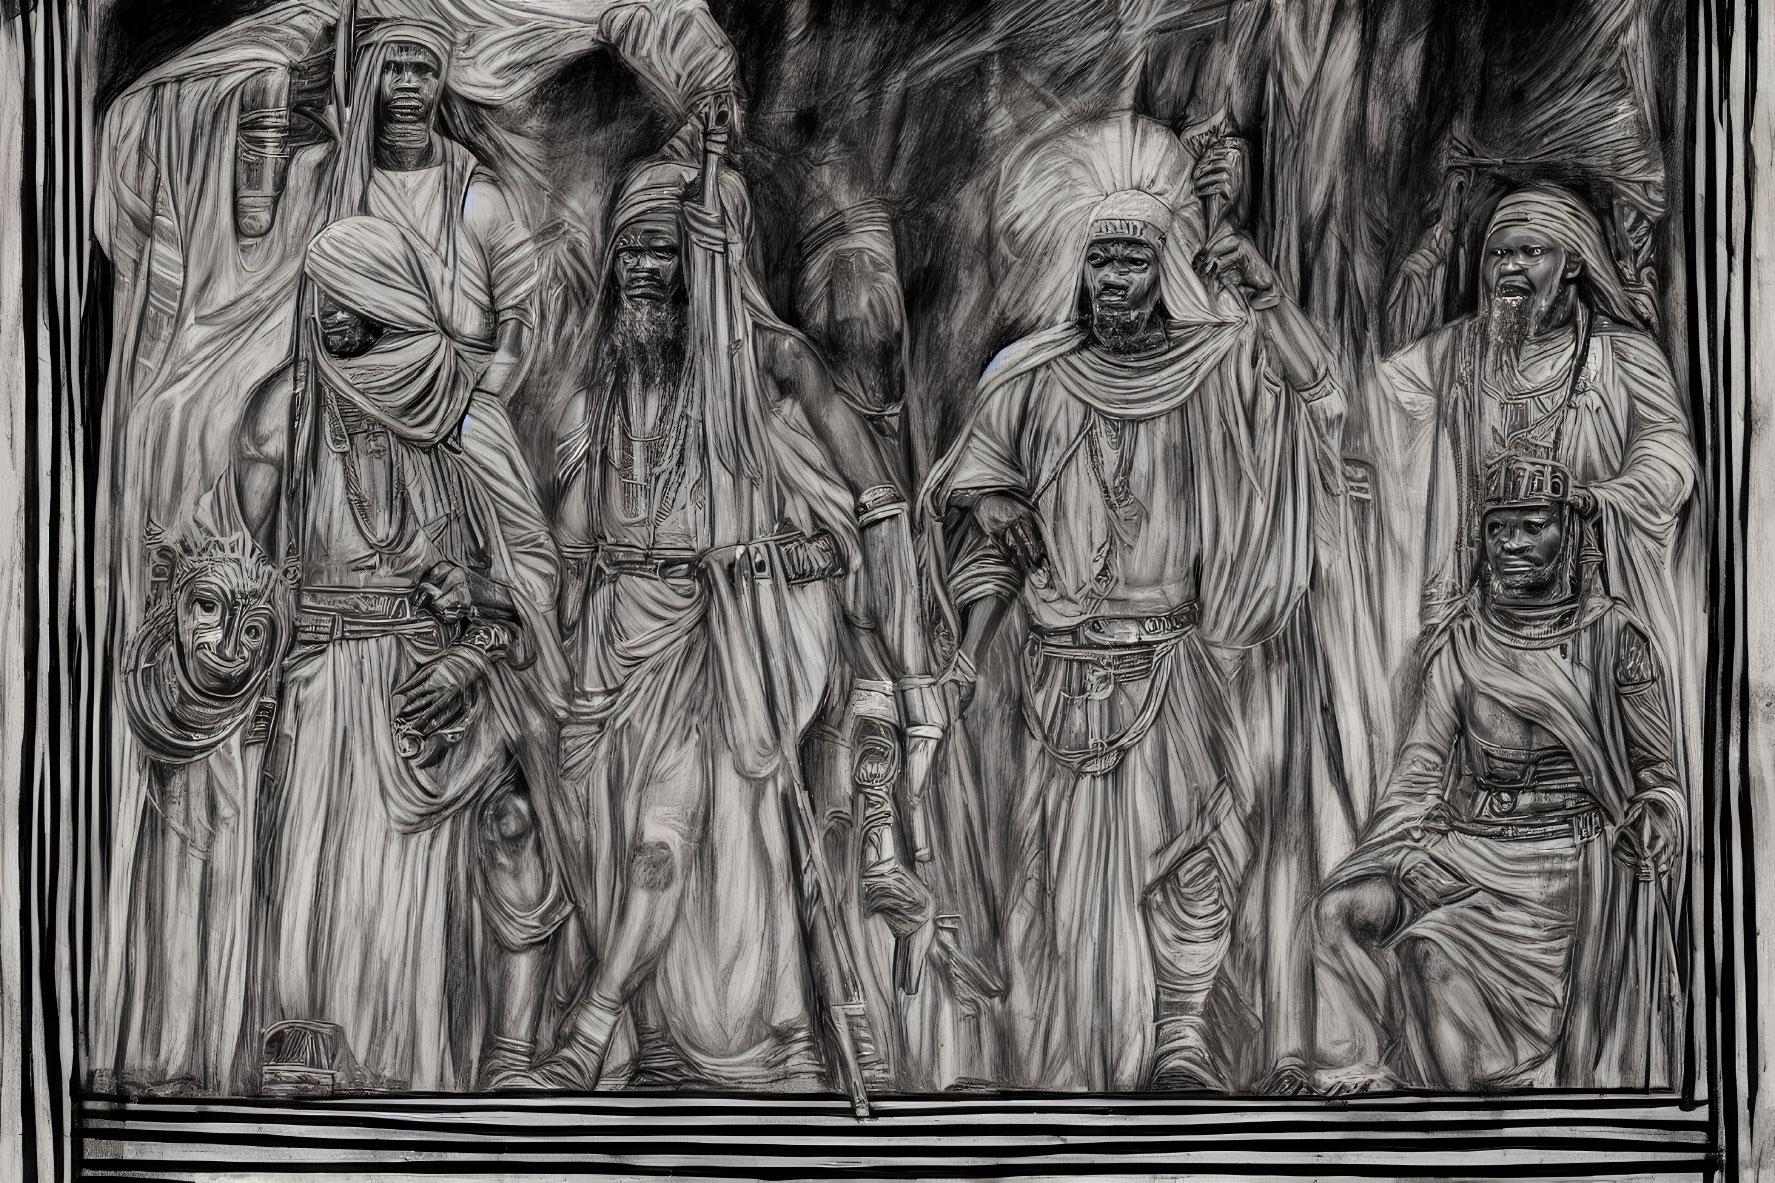 Monochrome artwork of five diverse warrior figures in regal attire.